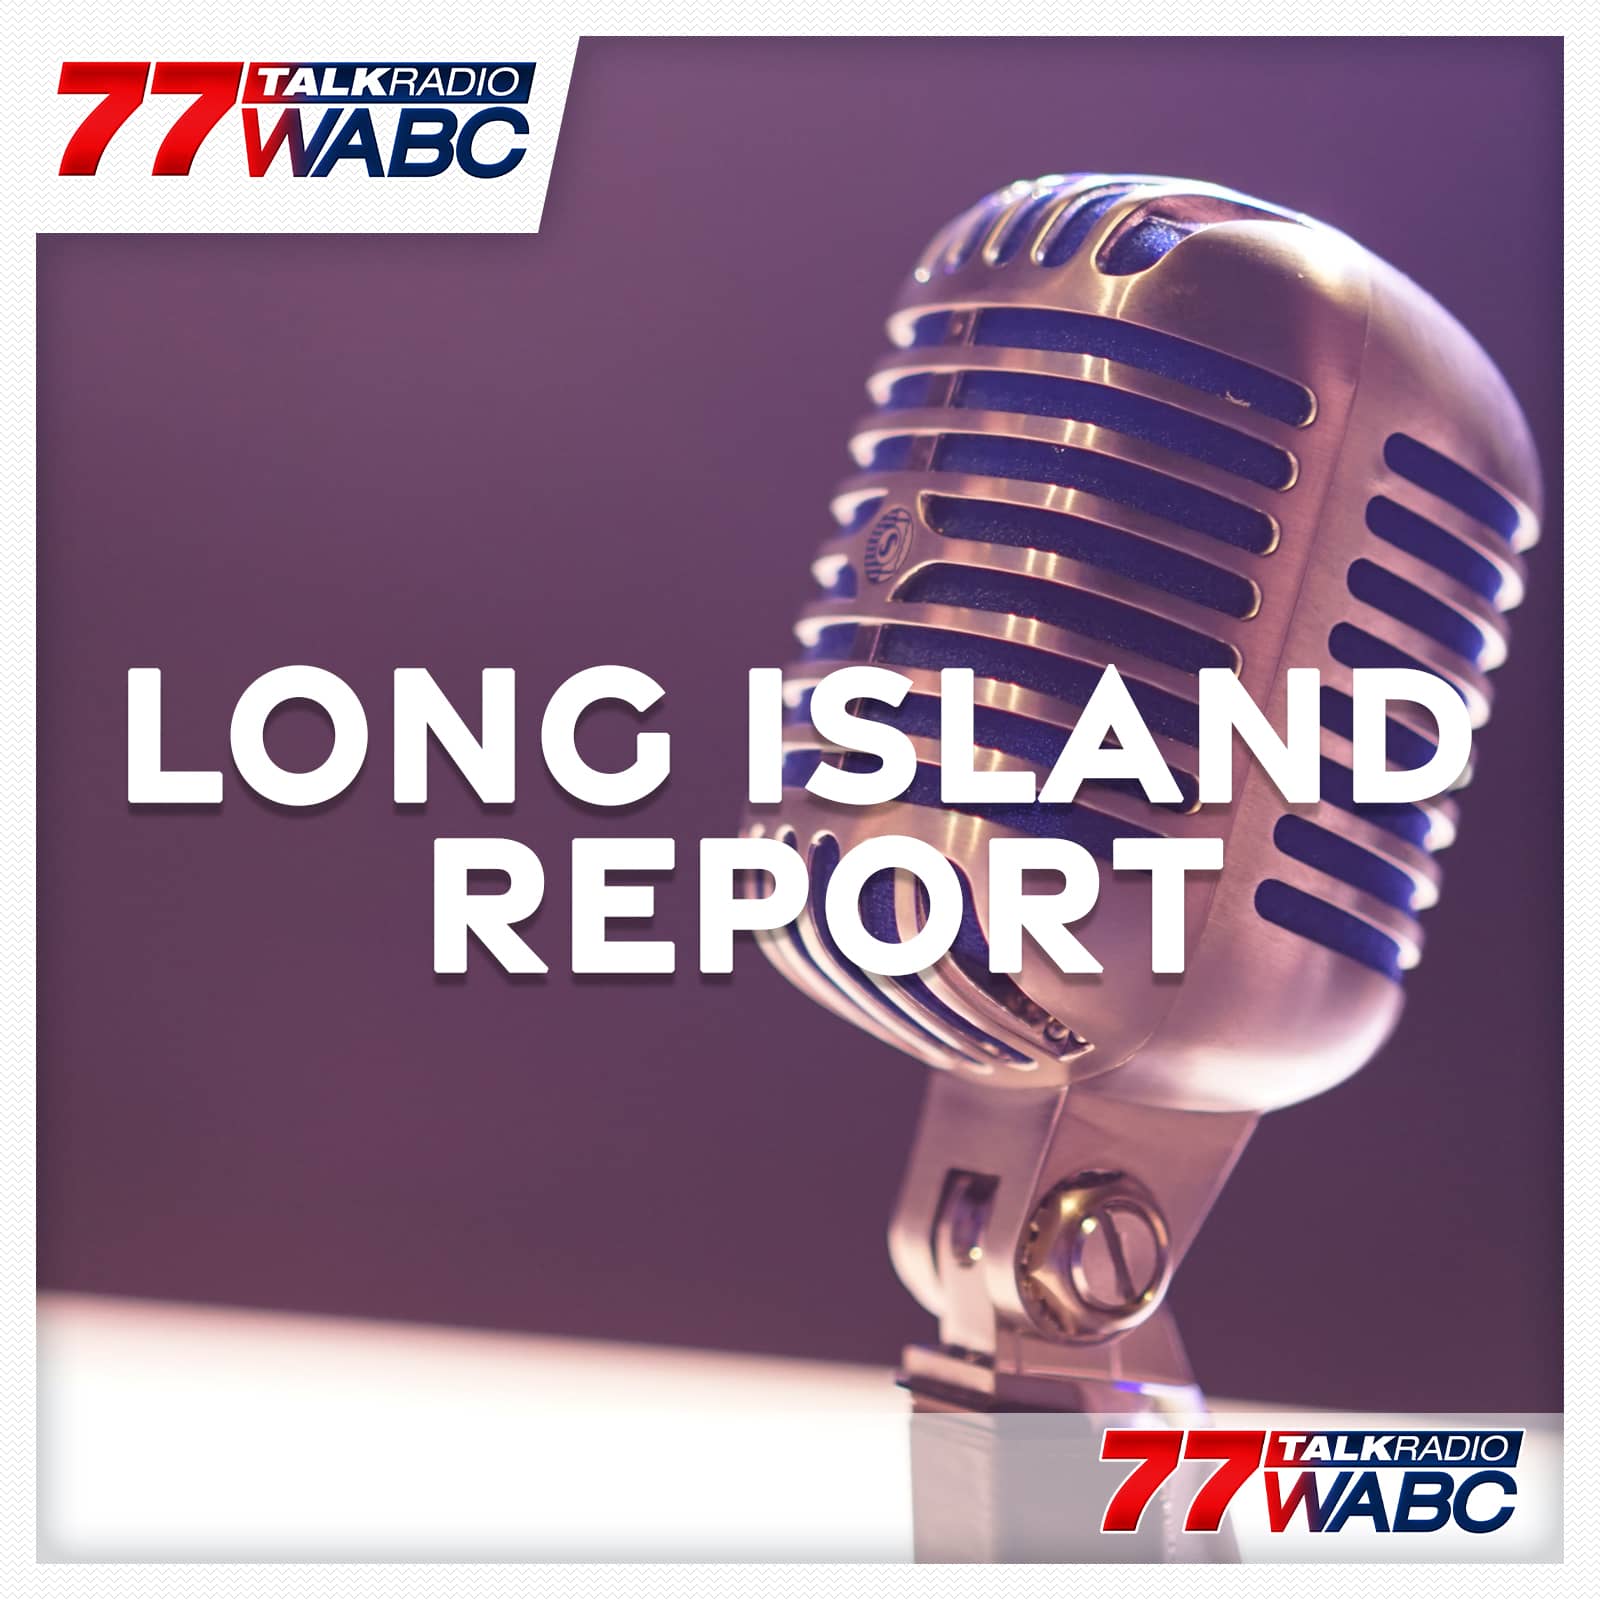 Long-Island-Report-square